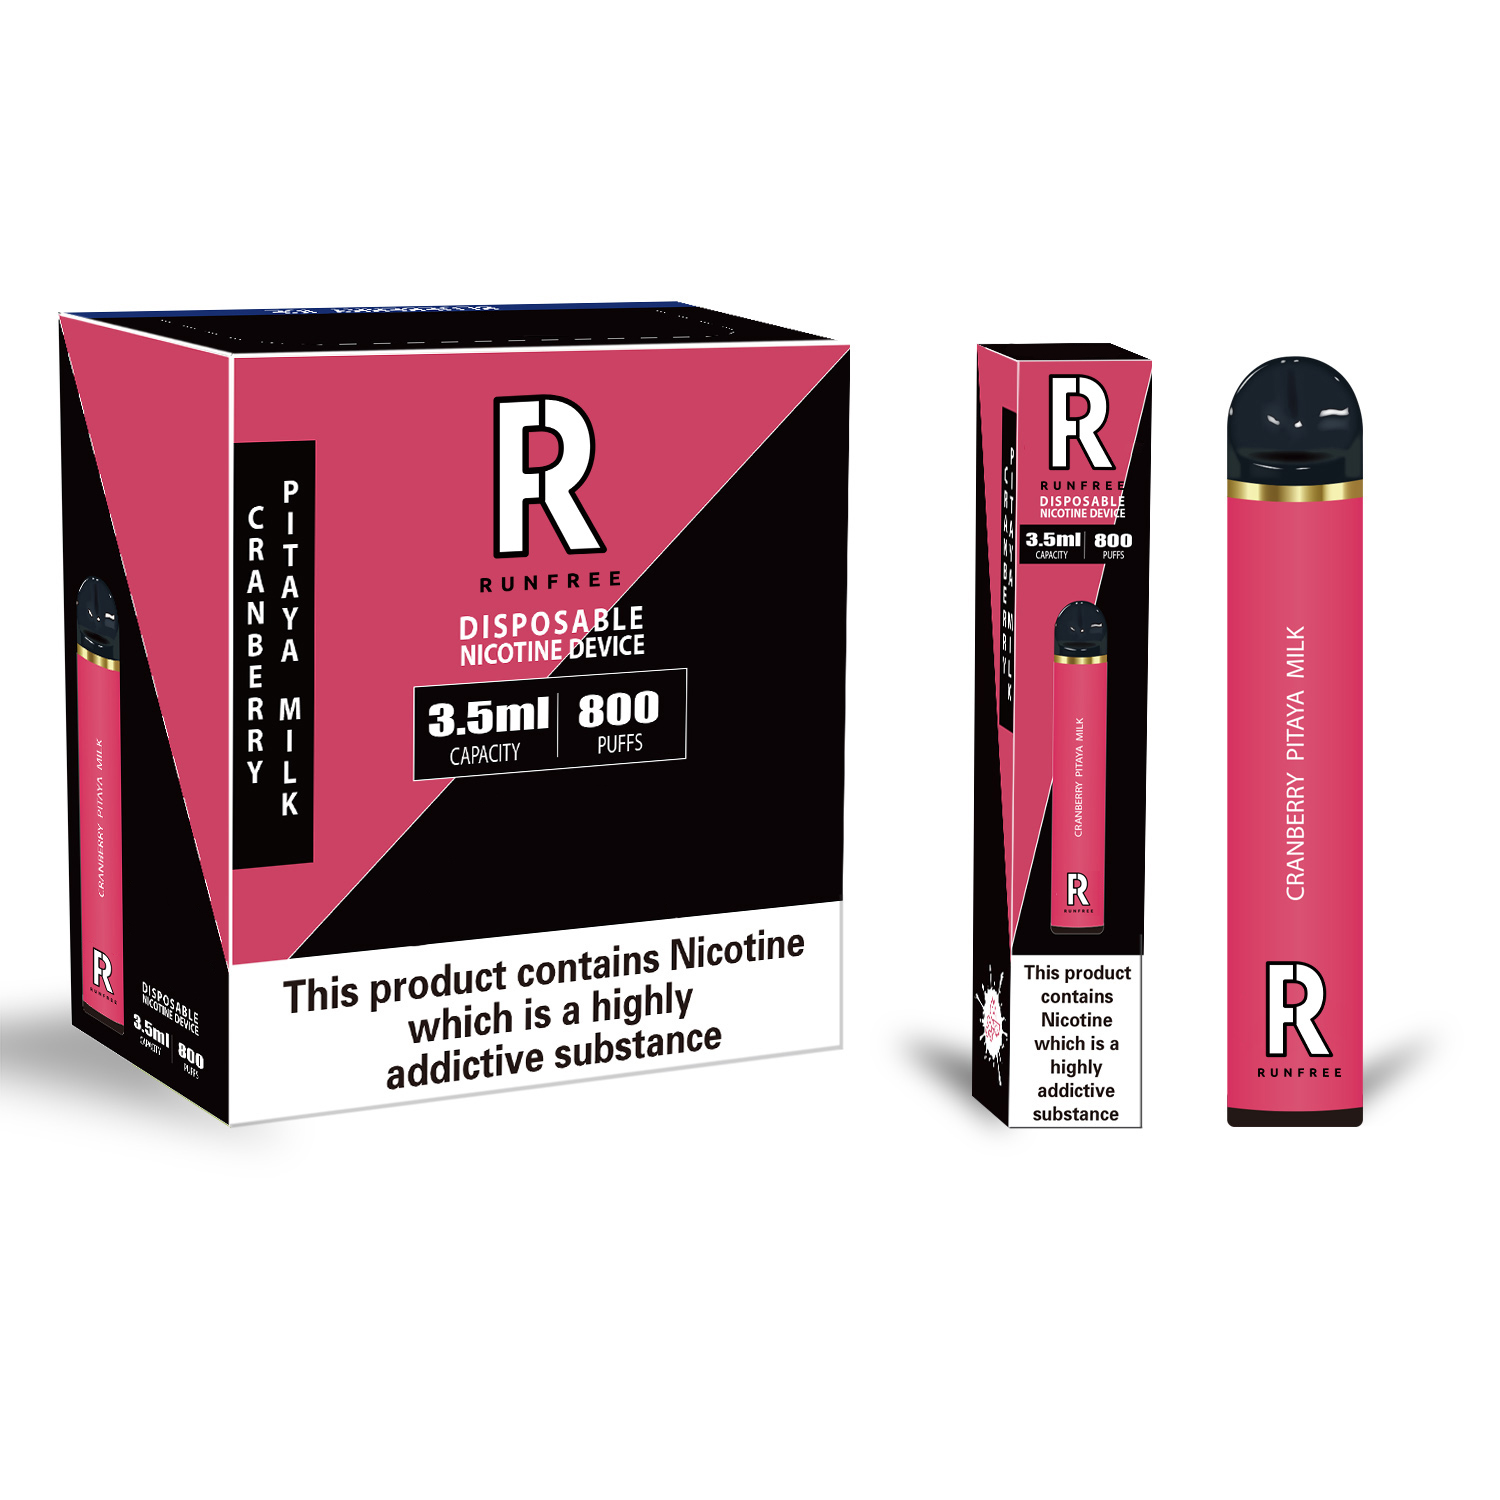 Runfree vaporizer pen for sale wholesale as gift-1